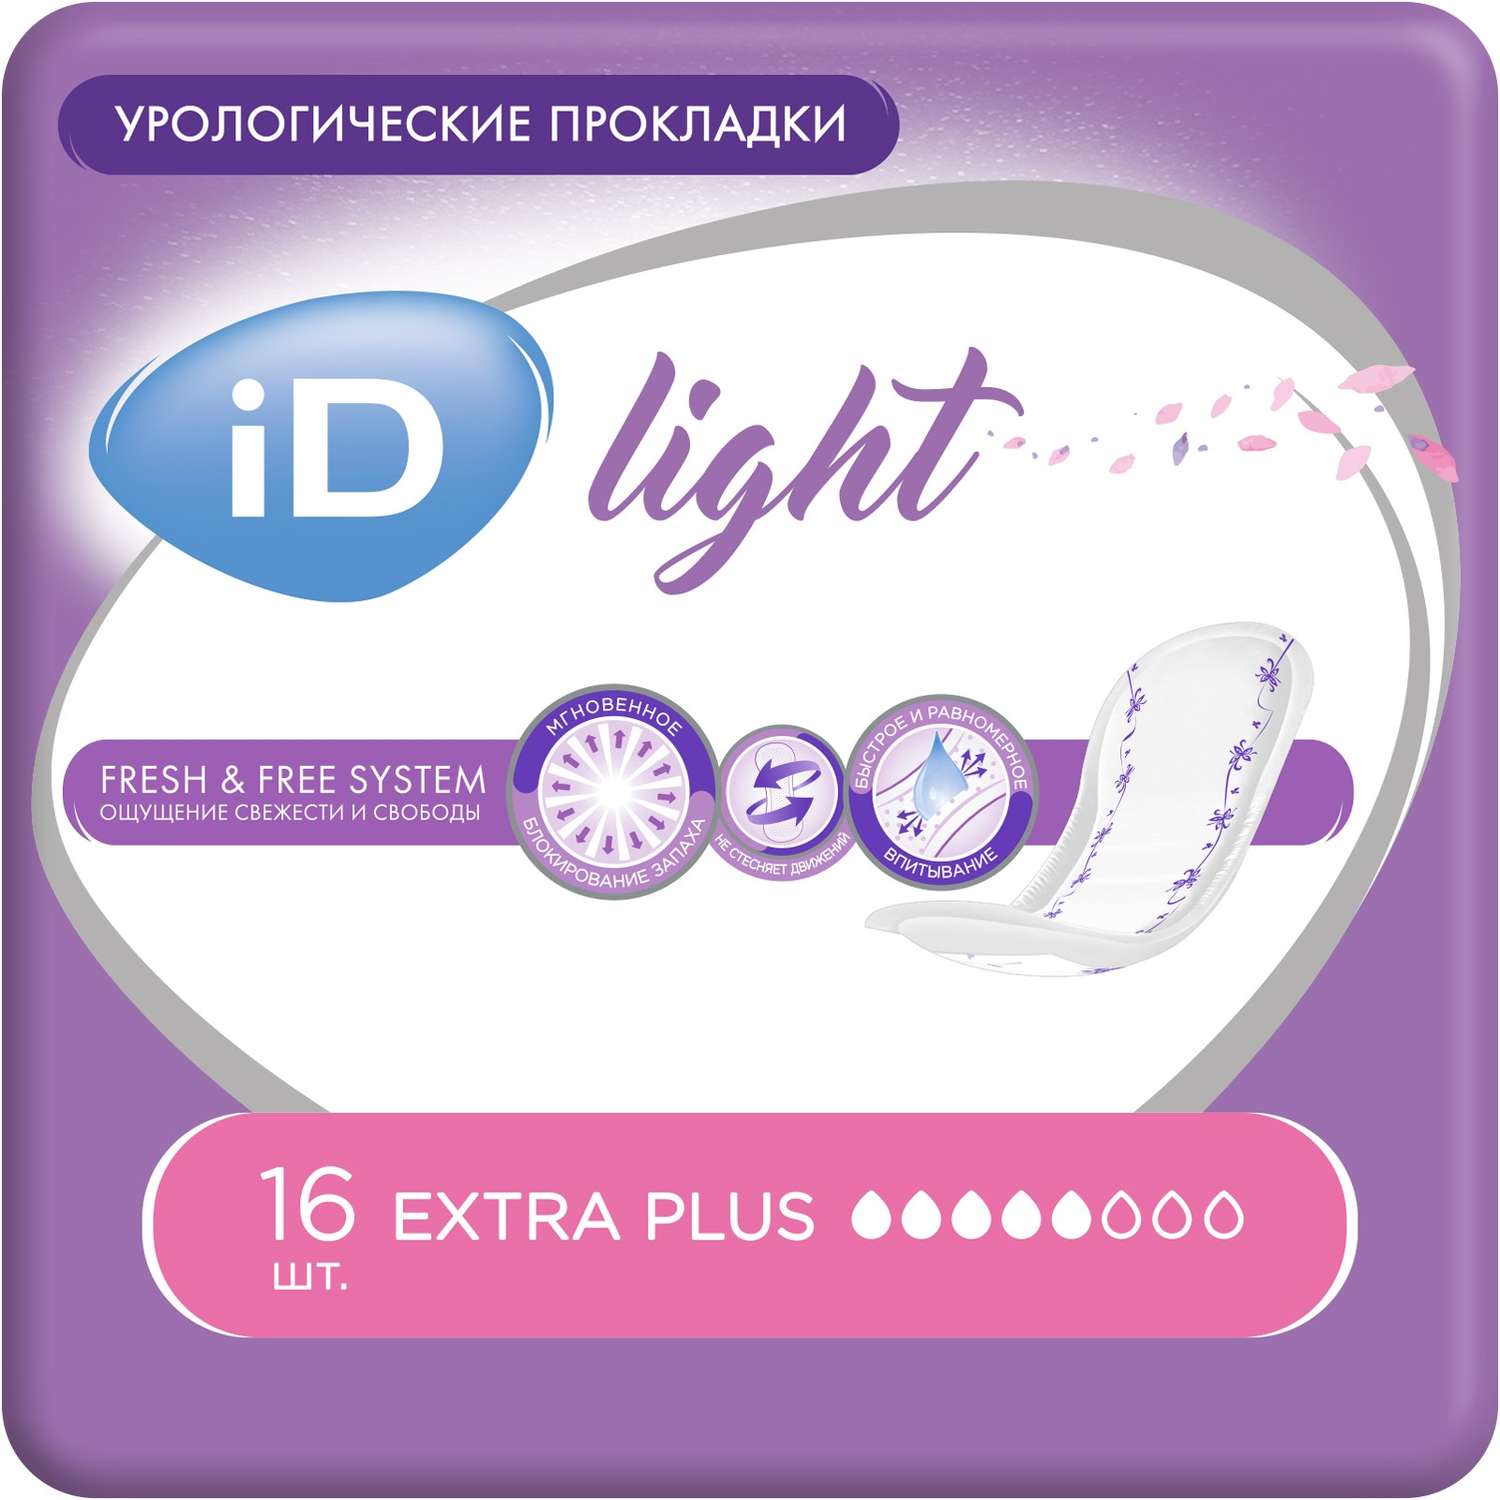 Прокладки урологические iD LIGHT Extra plus 16 шт. х2 упаковки - фото 1